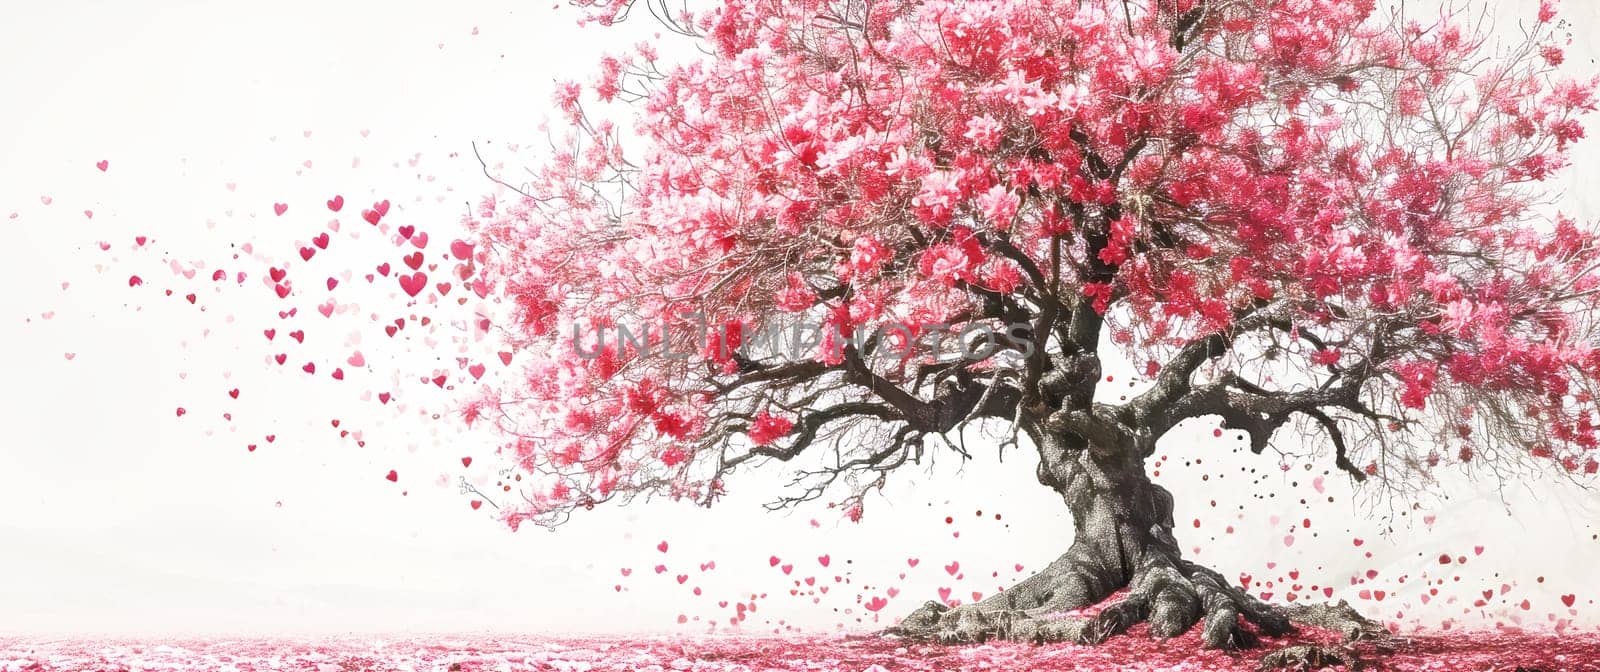 Pink sakura tree blooming on white background by NataliPopova